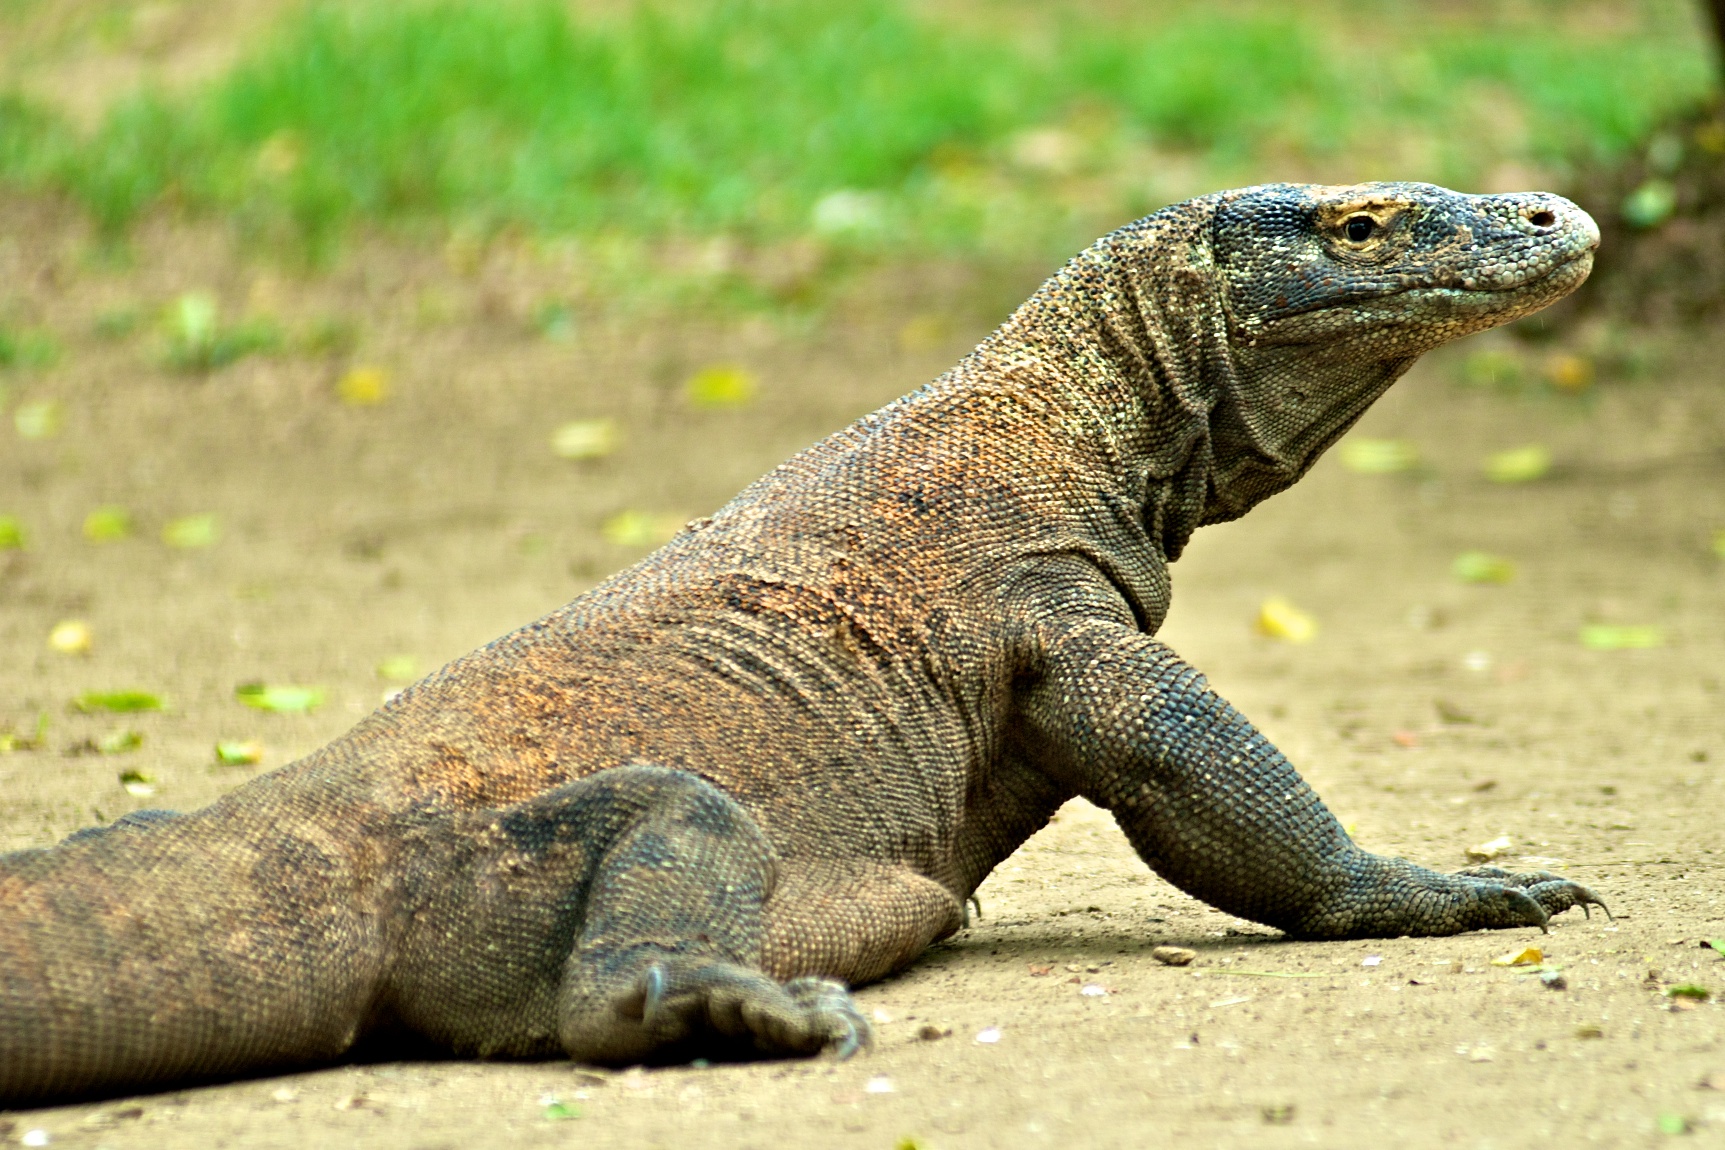 Largest lizard in the world: Komodo dragon